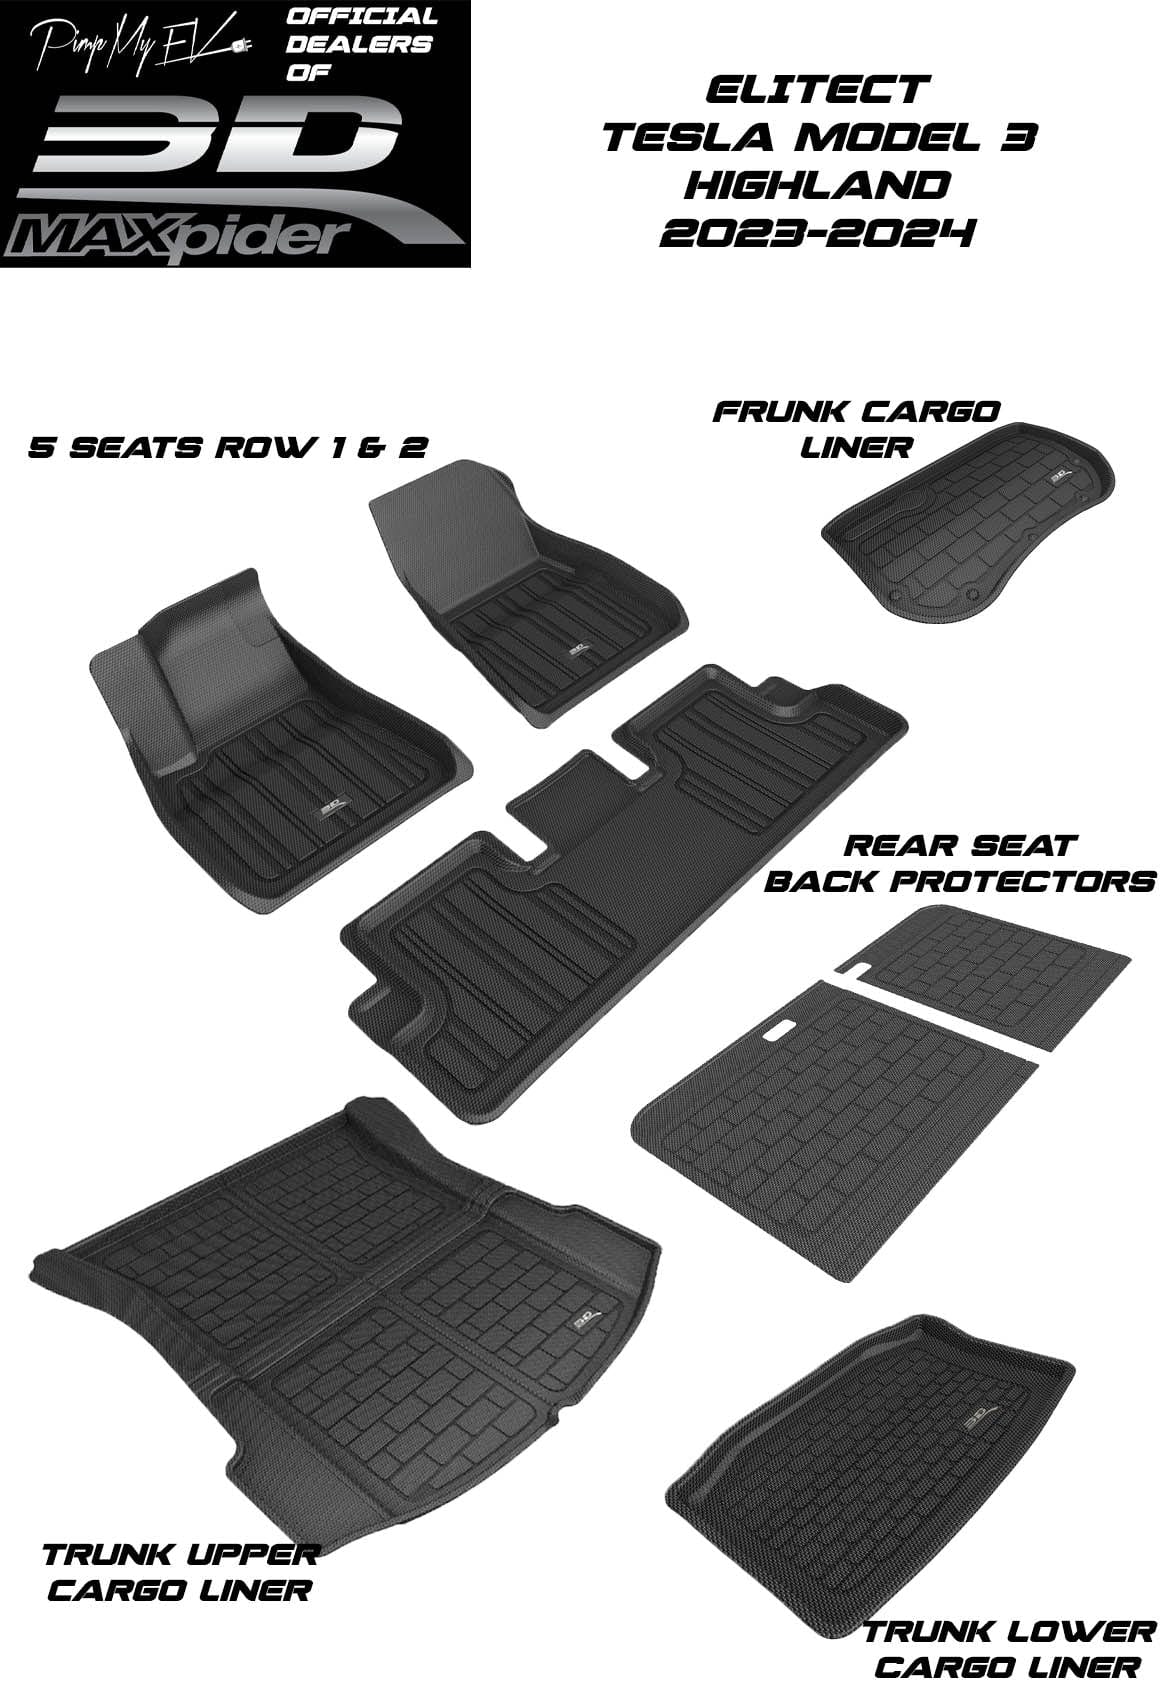 3D MAXpider Custom Fit All-Weather ELITECT Series LHD Floor Mats For Tesla Model 3 Highland 5 SEAT 2023-2024 - PimpMyEV